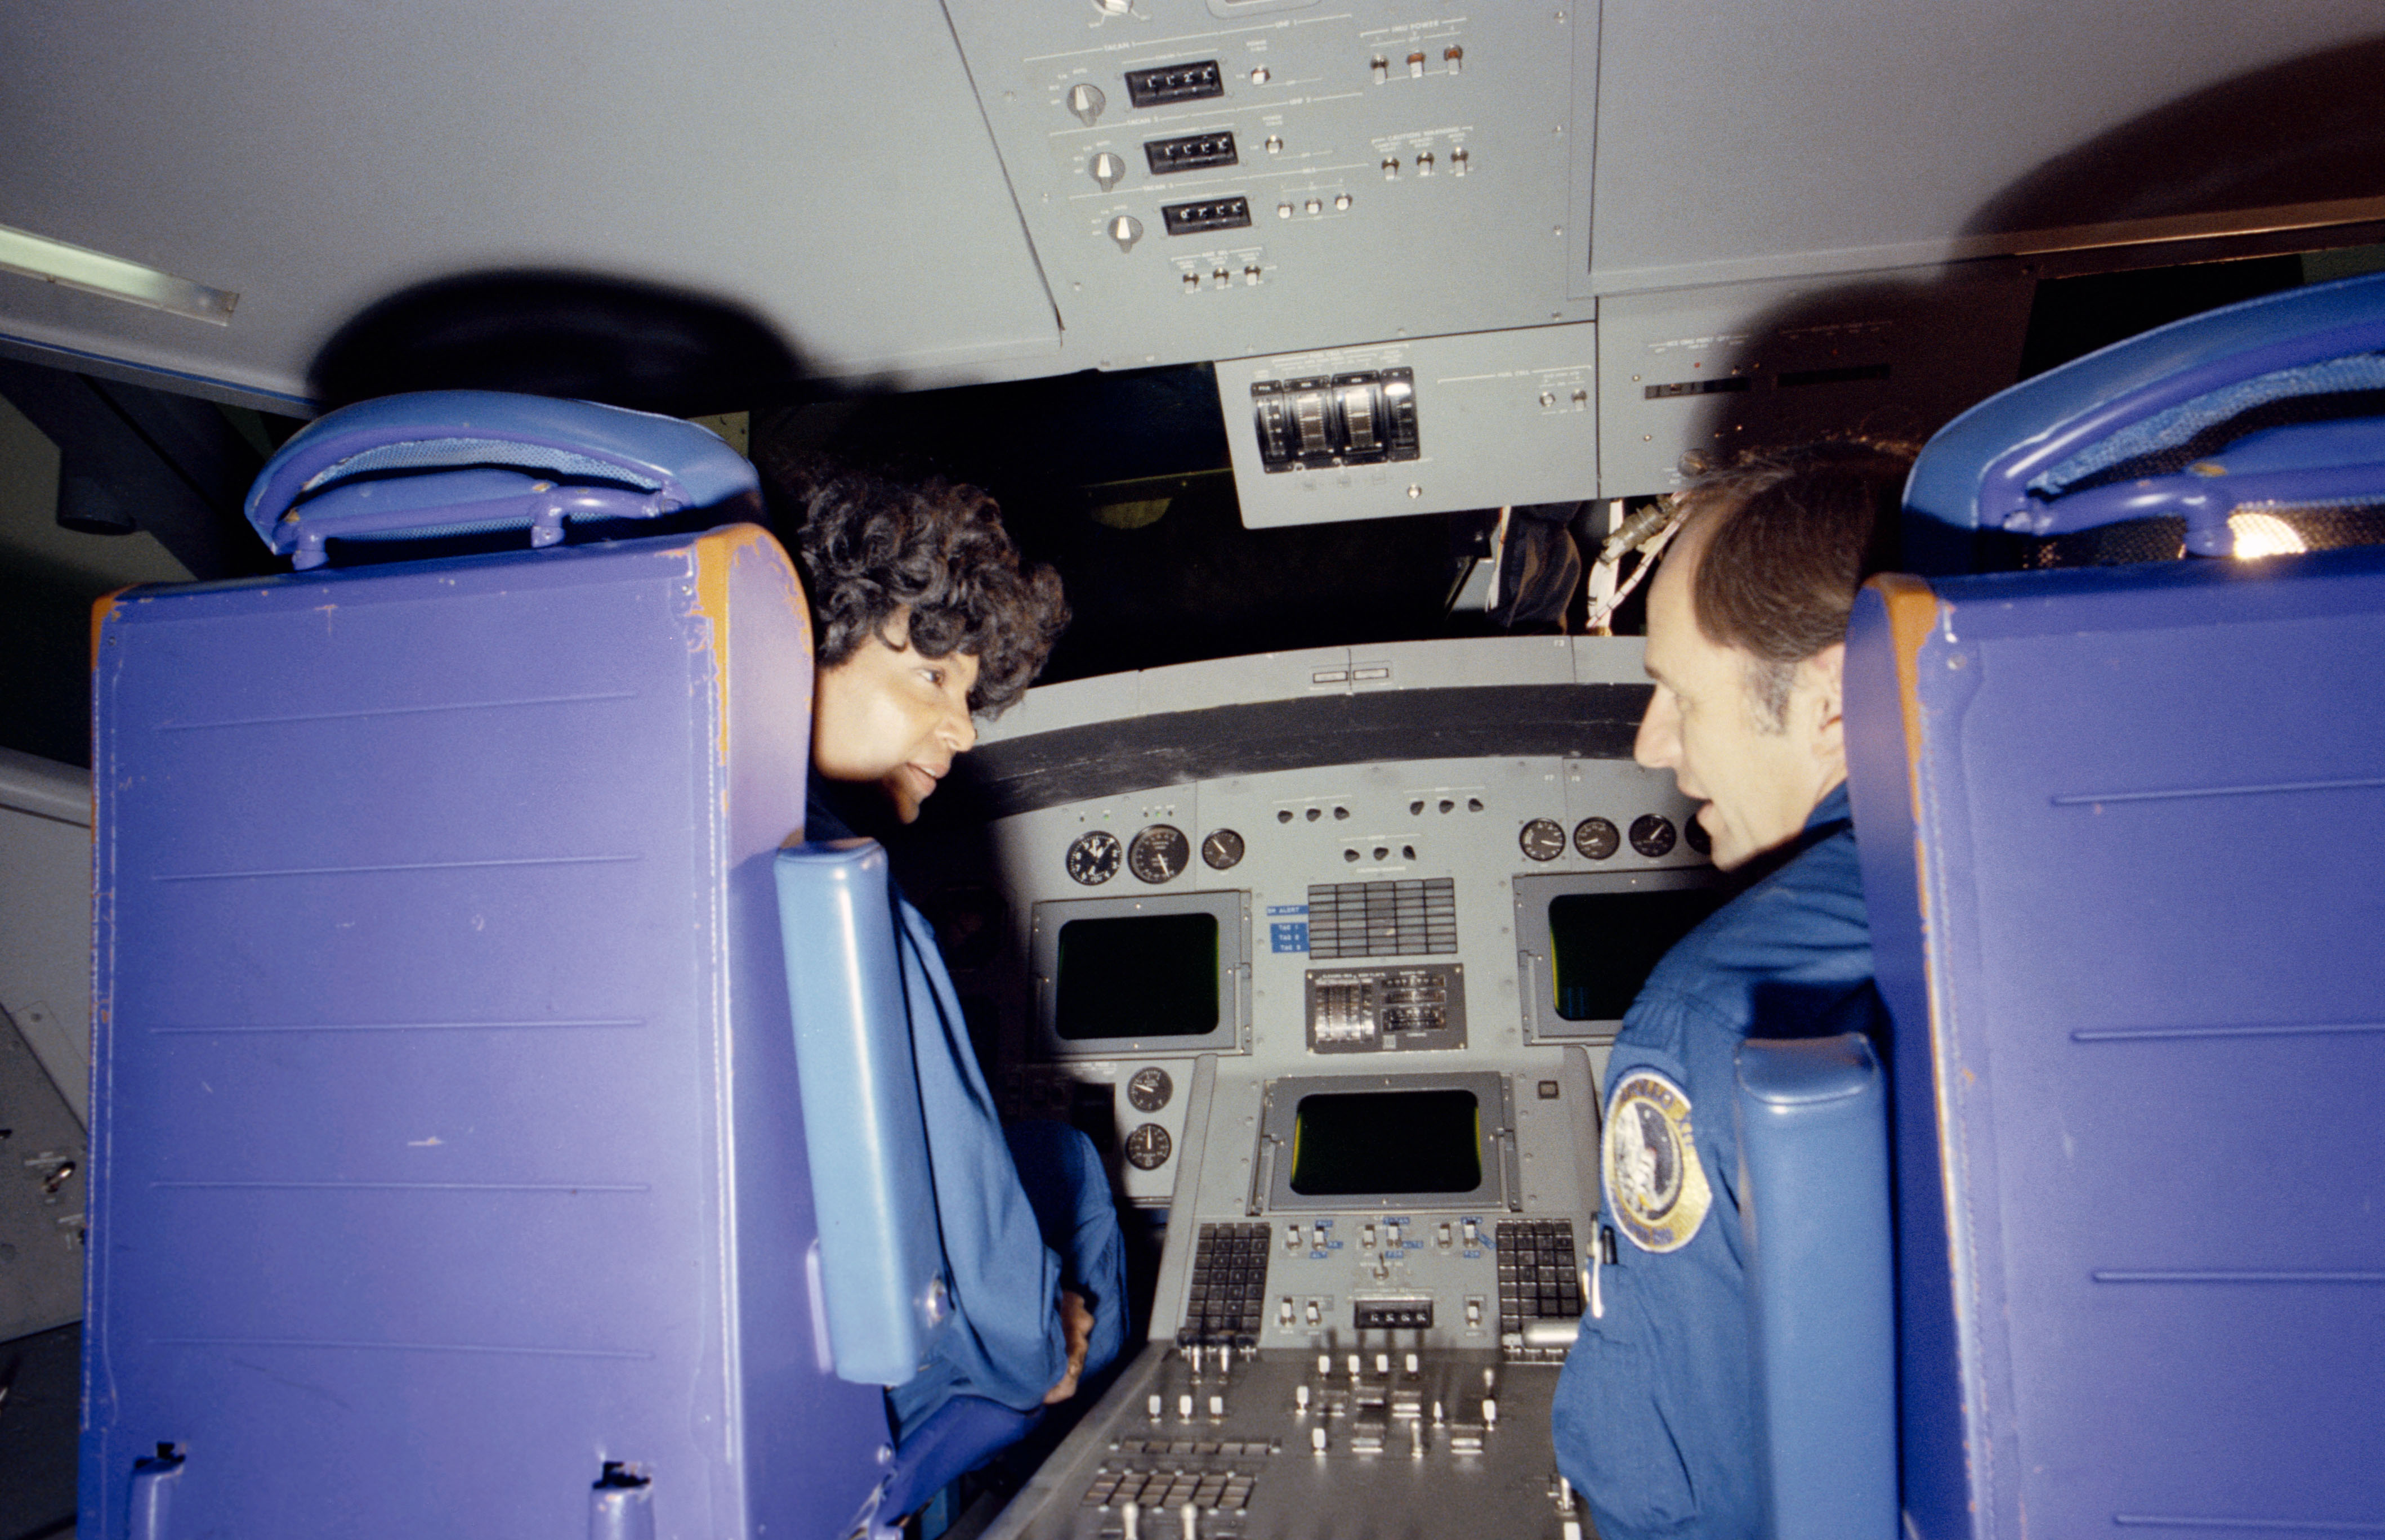 Star Trek cast member Nichelle Nichols, left, in the shuttle simulator with astronaut Alan L. Bean at NASA’s Johnson Space Center (JSC) in Houston